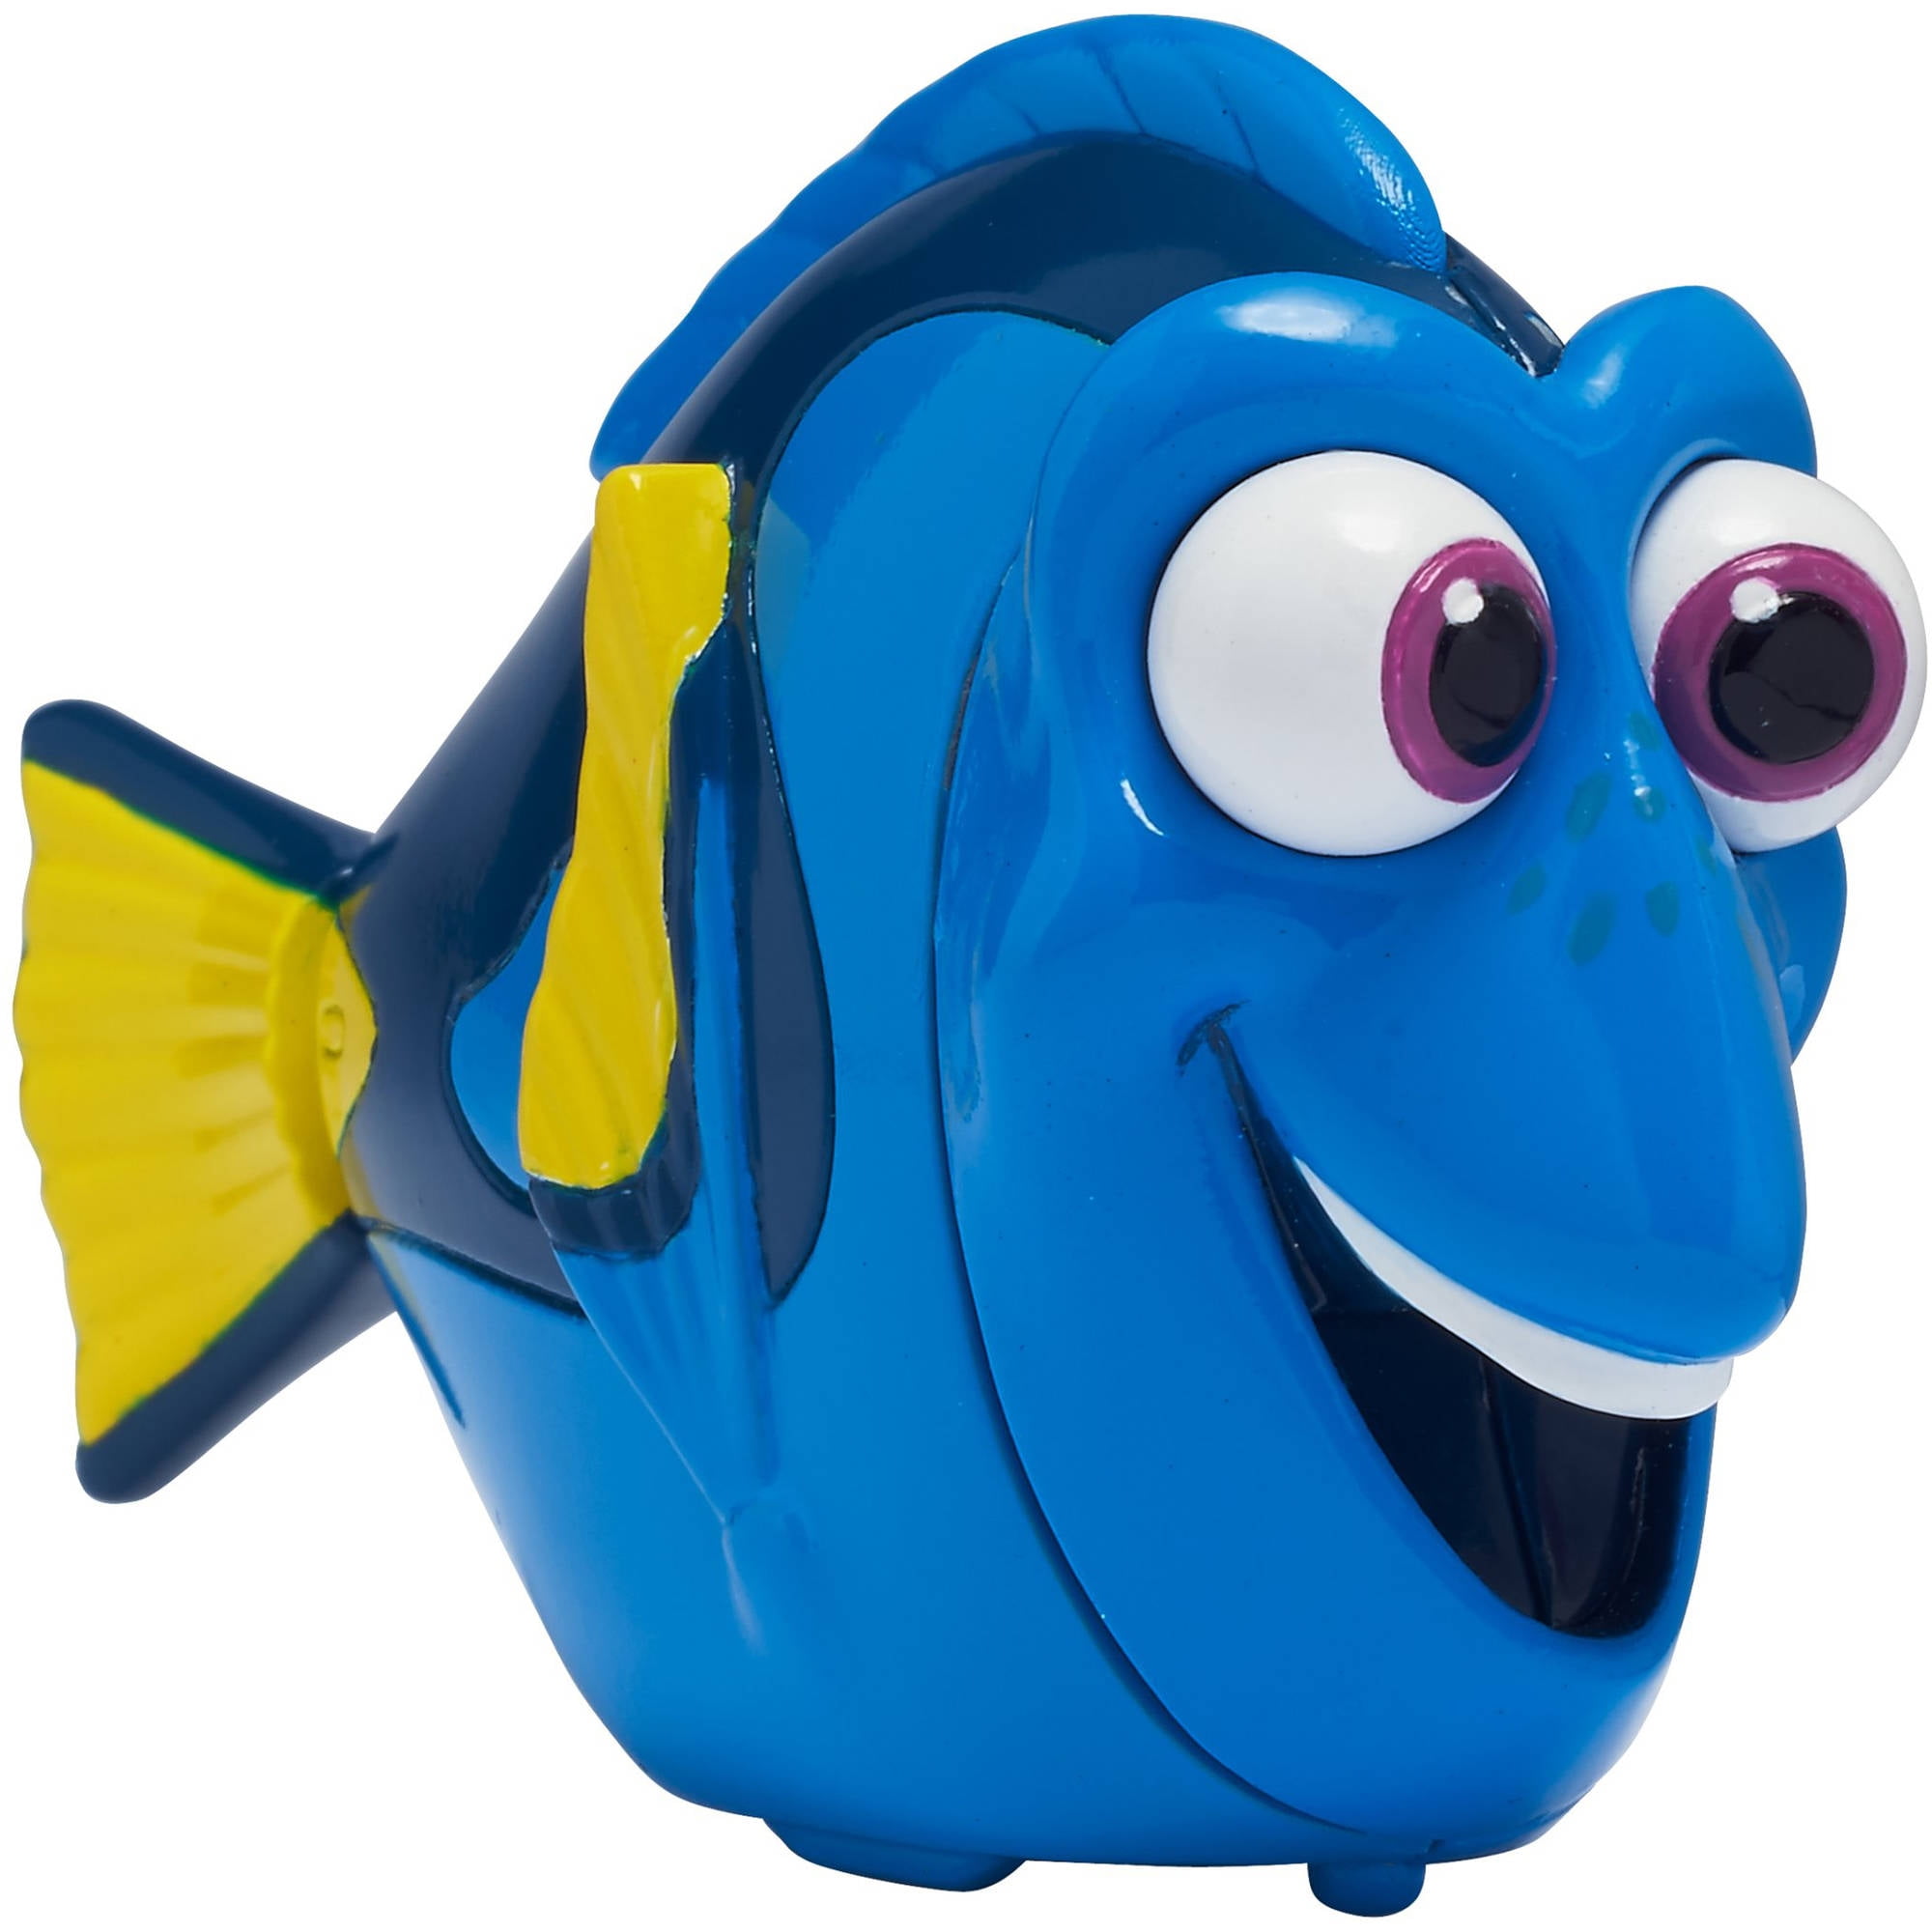 Neuf Boîte Choisissez Parmi Menu RRP £ 5.99 BanDai Disney Finding Dory swigglefish 